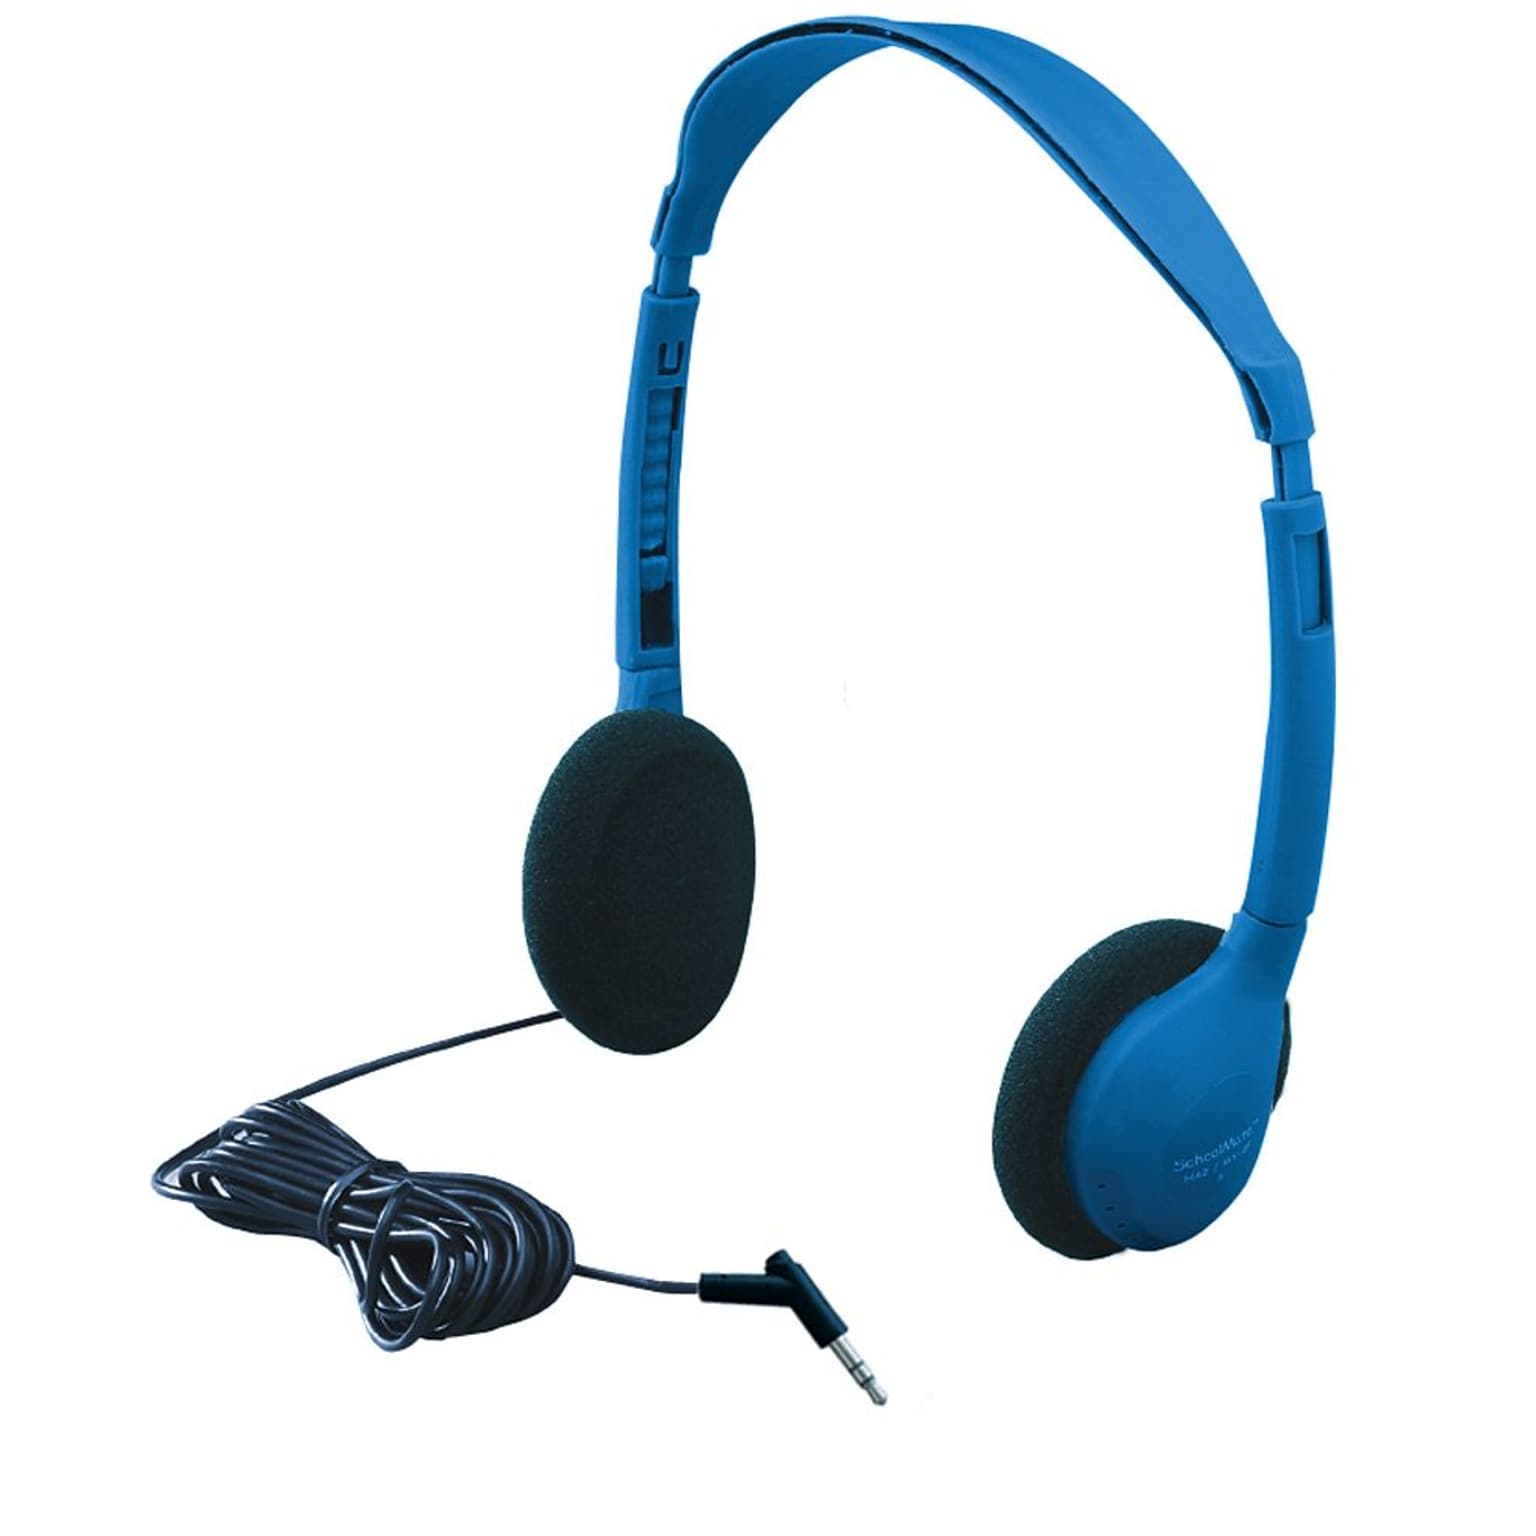 HamiltonBuhl Stereo Headphones, Blue (KIDS-HA2)